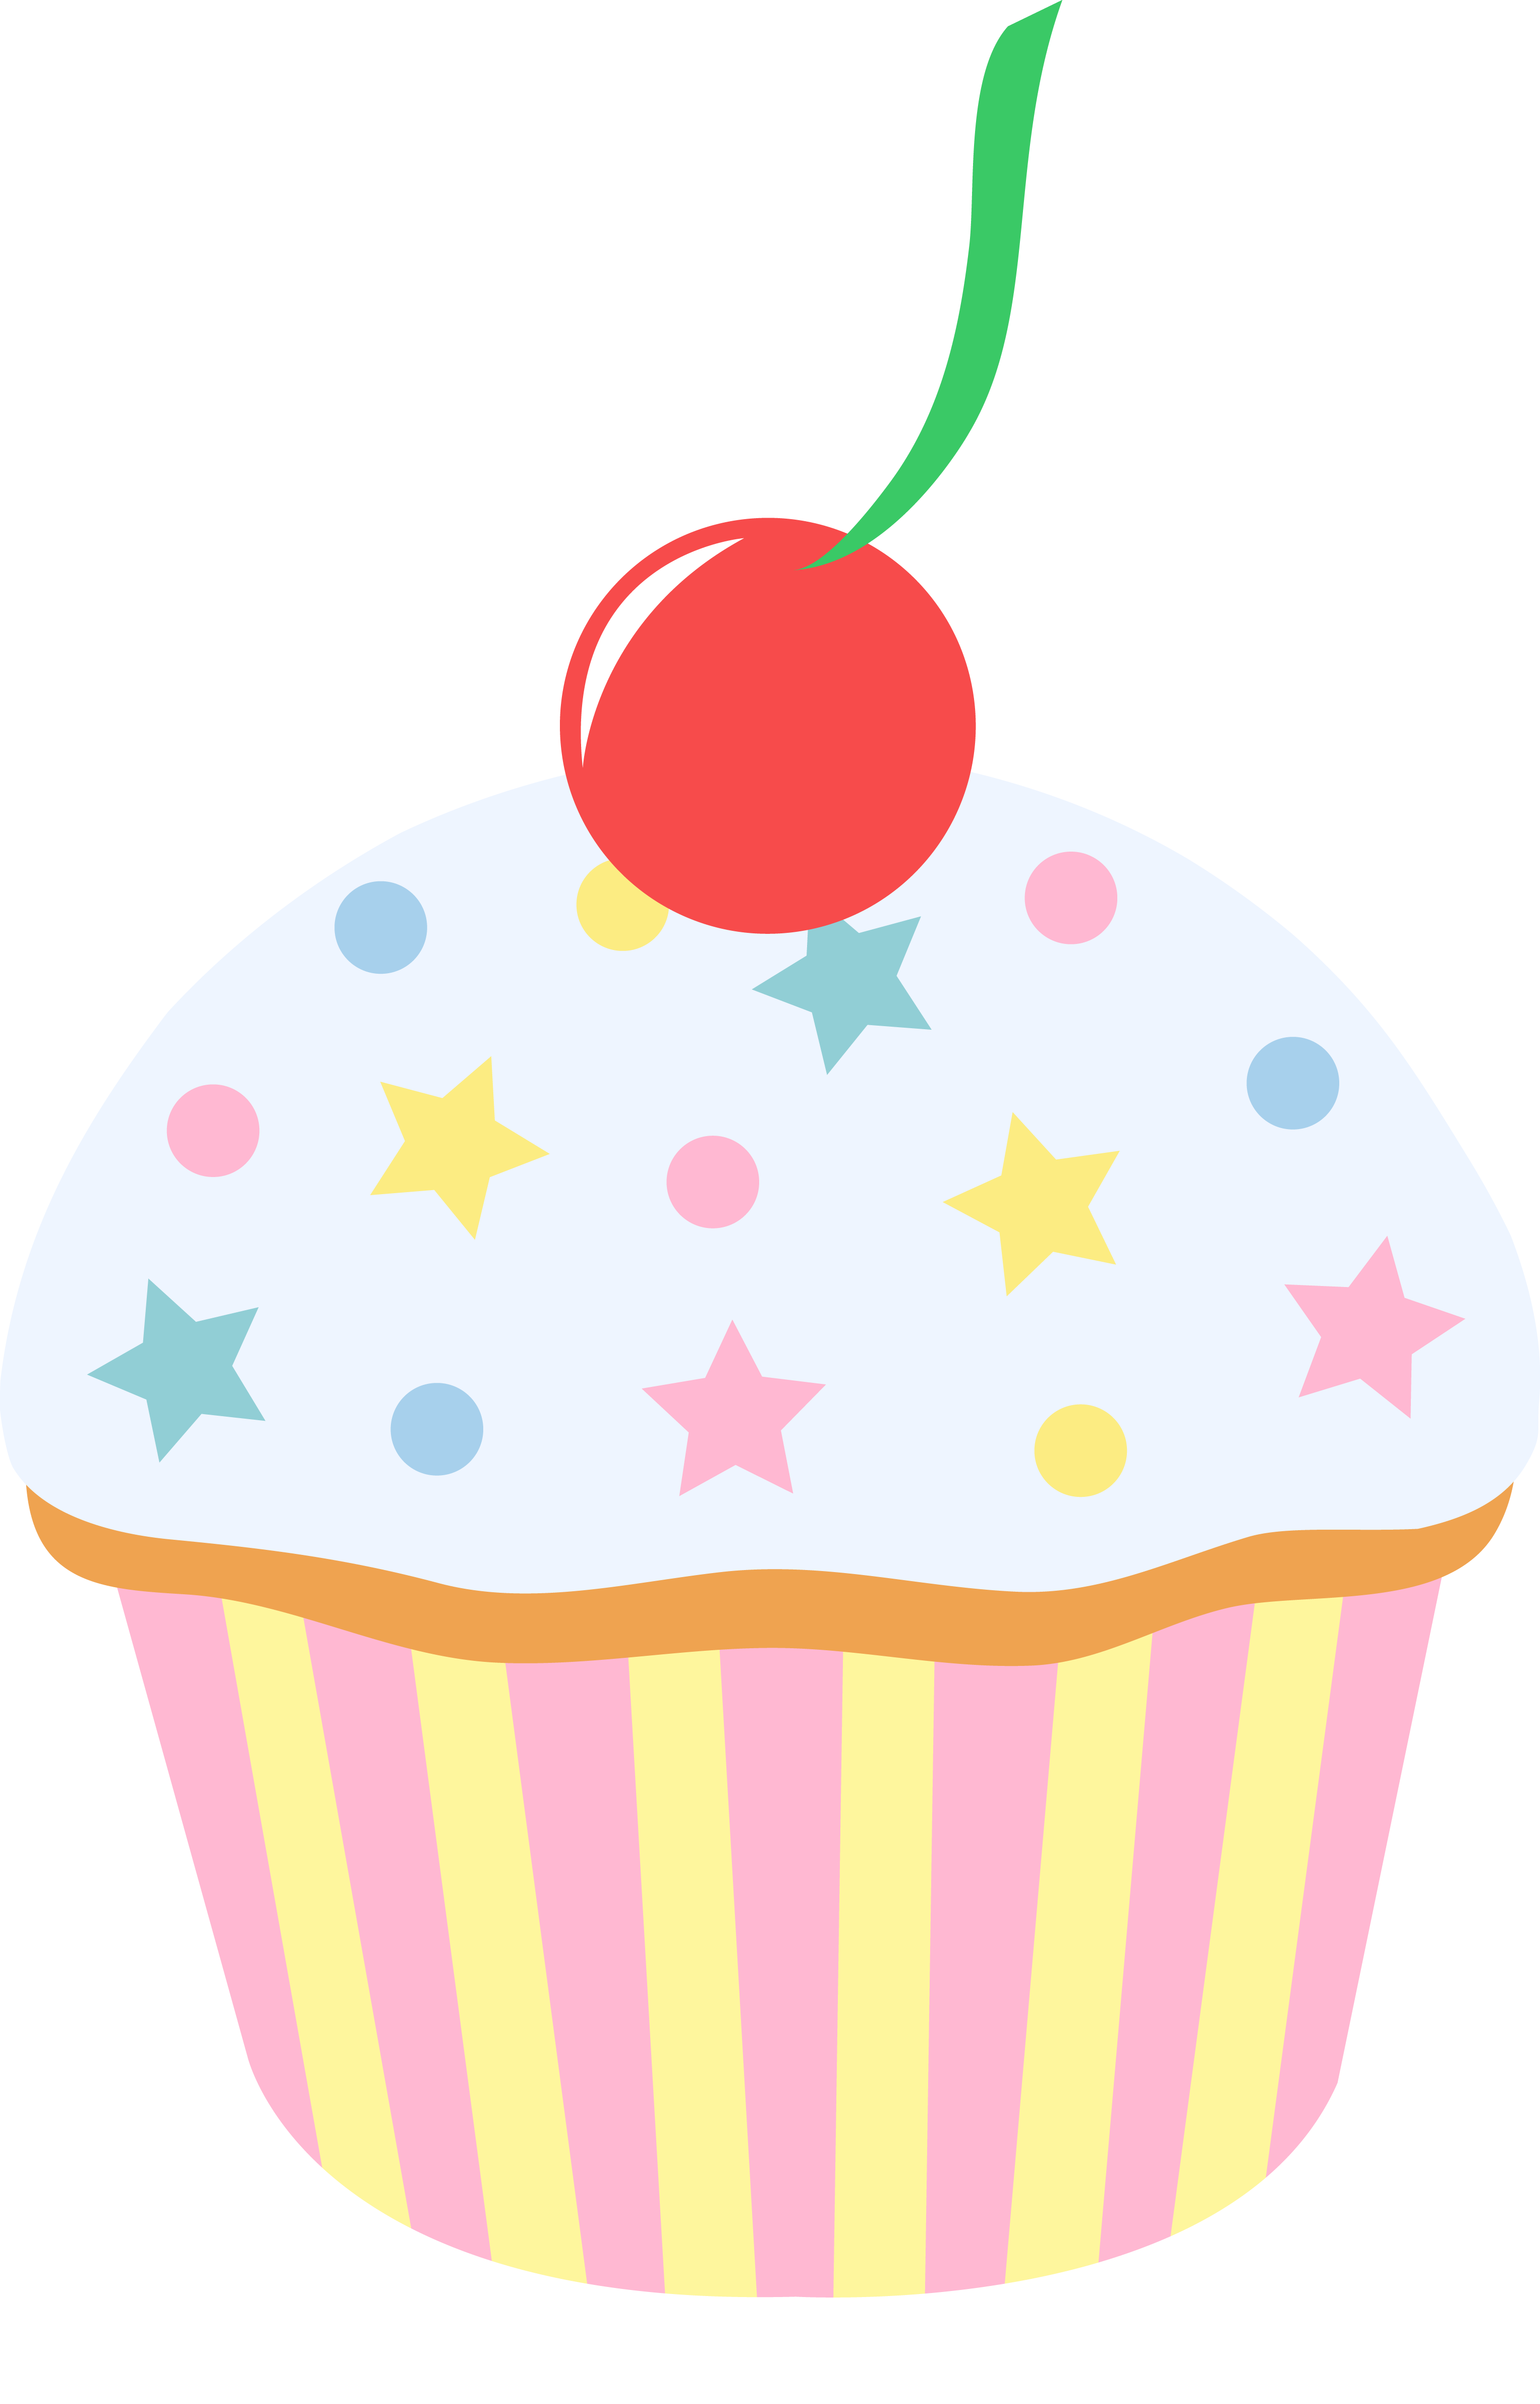 Cartoon Cupcake Cherry On Top PNG HD Quality